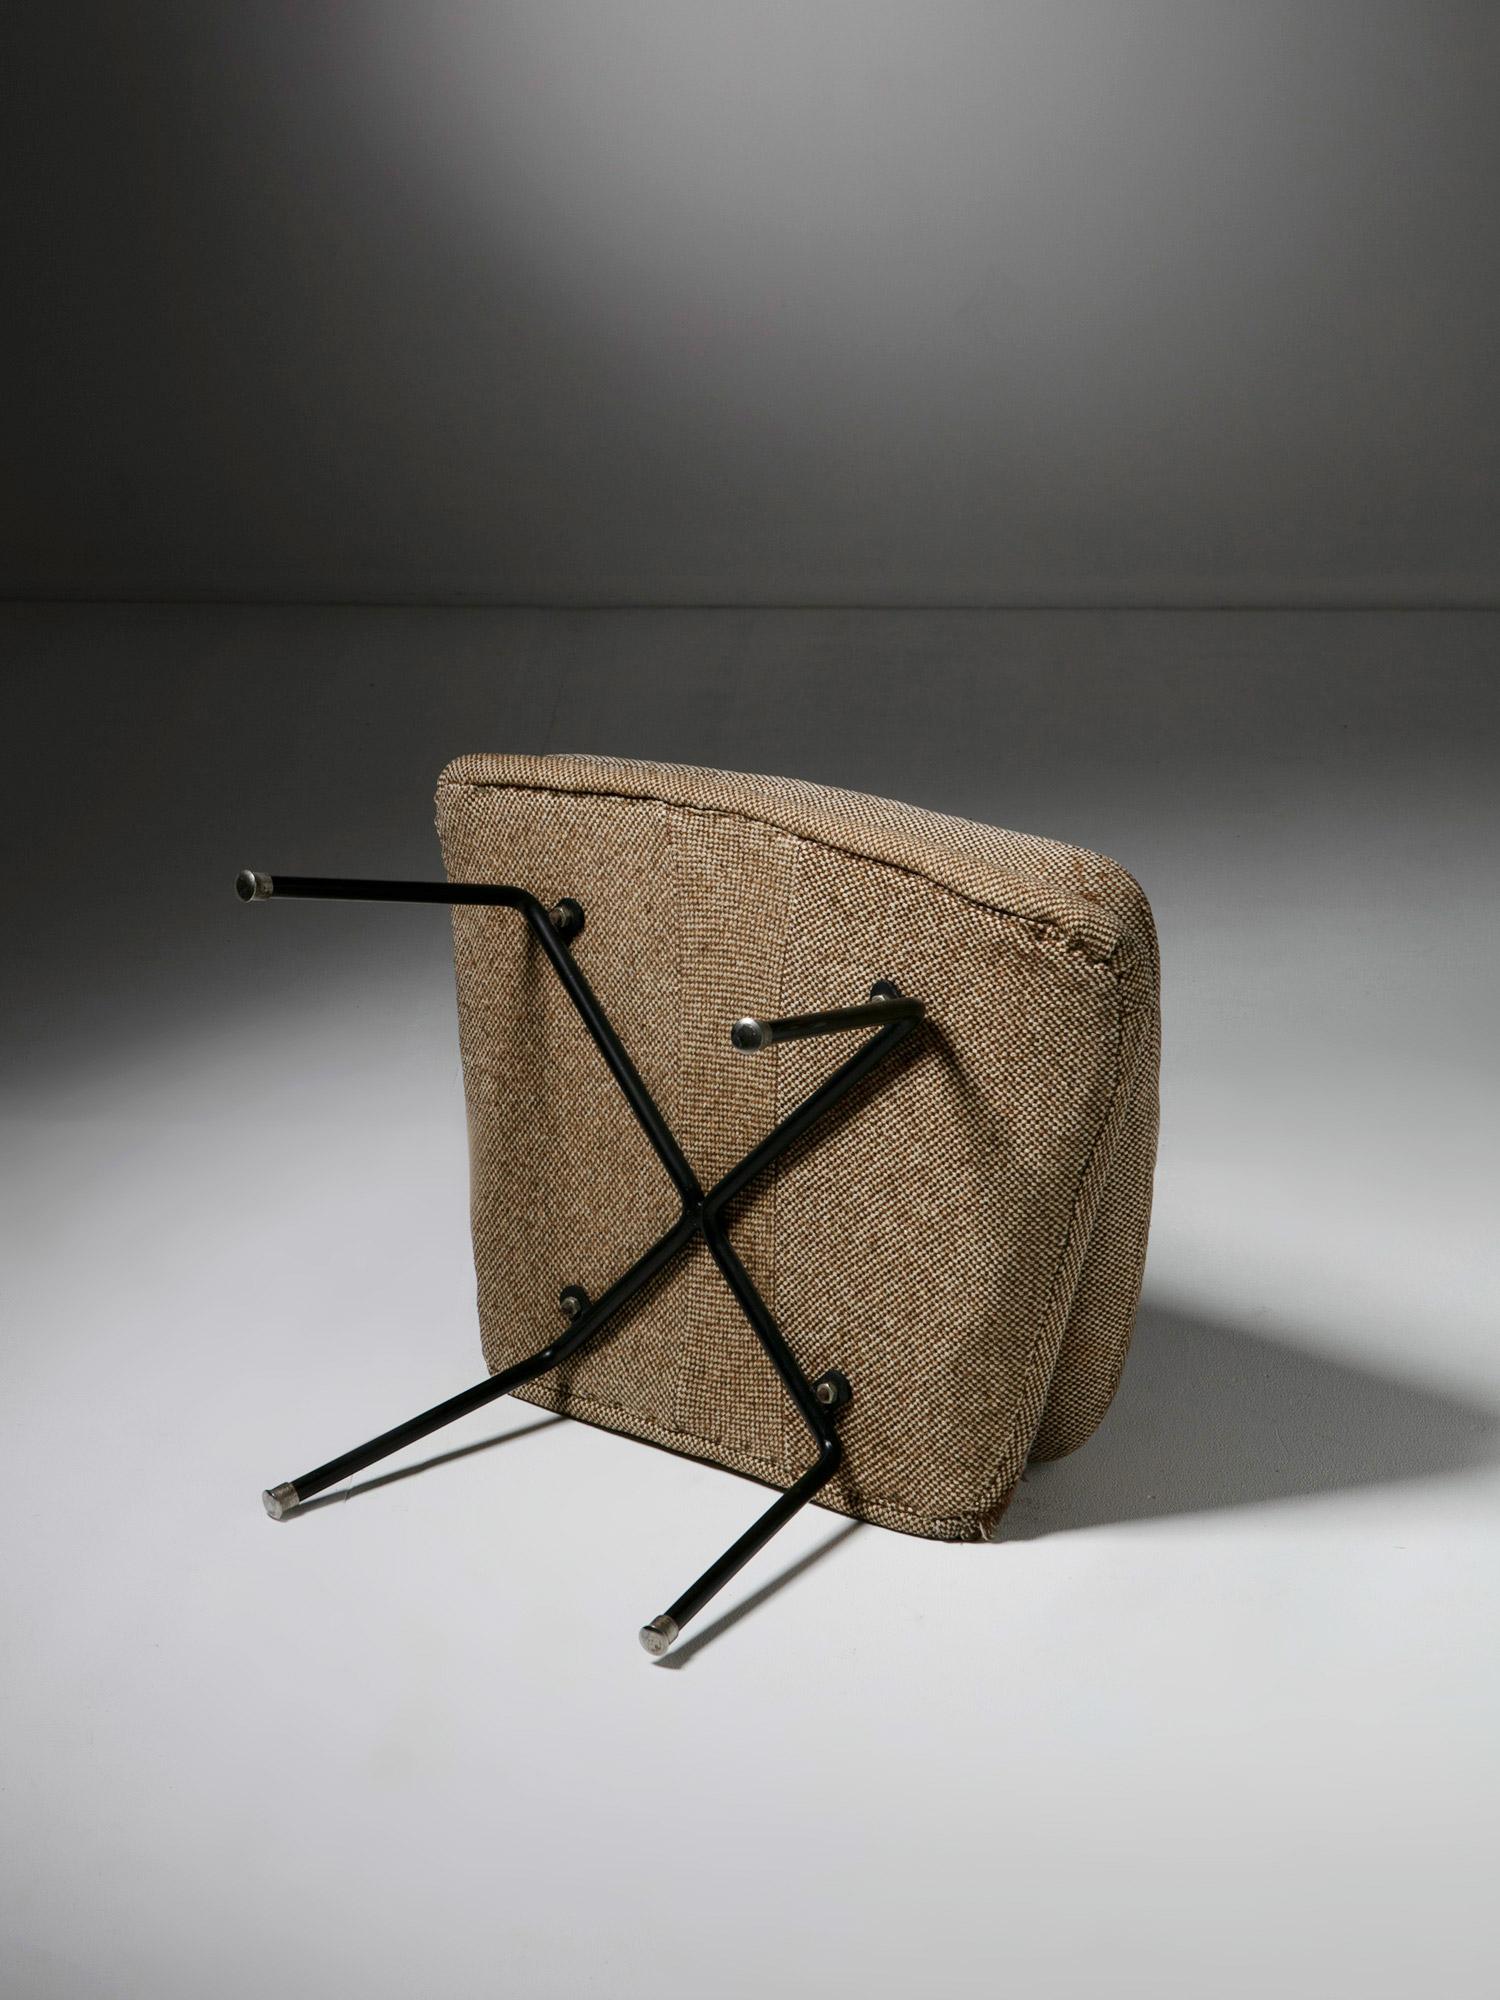 American Womb Chair Ottoman by Eero Saarinen for Knoll